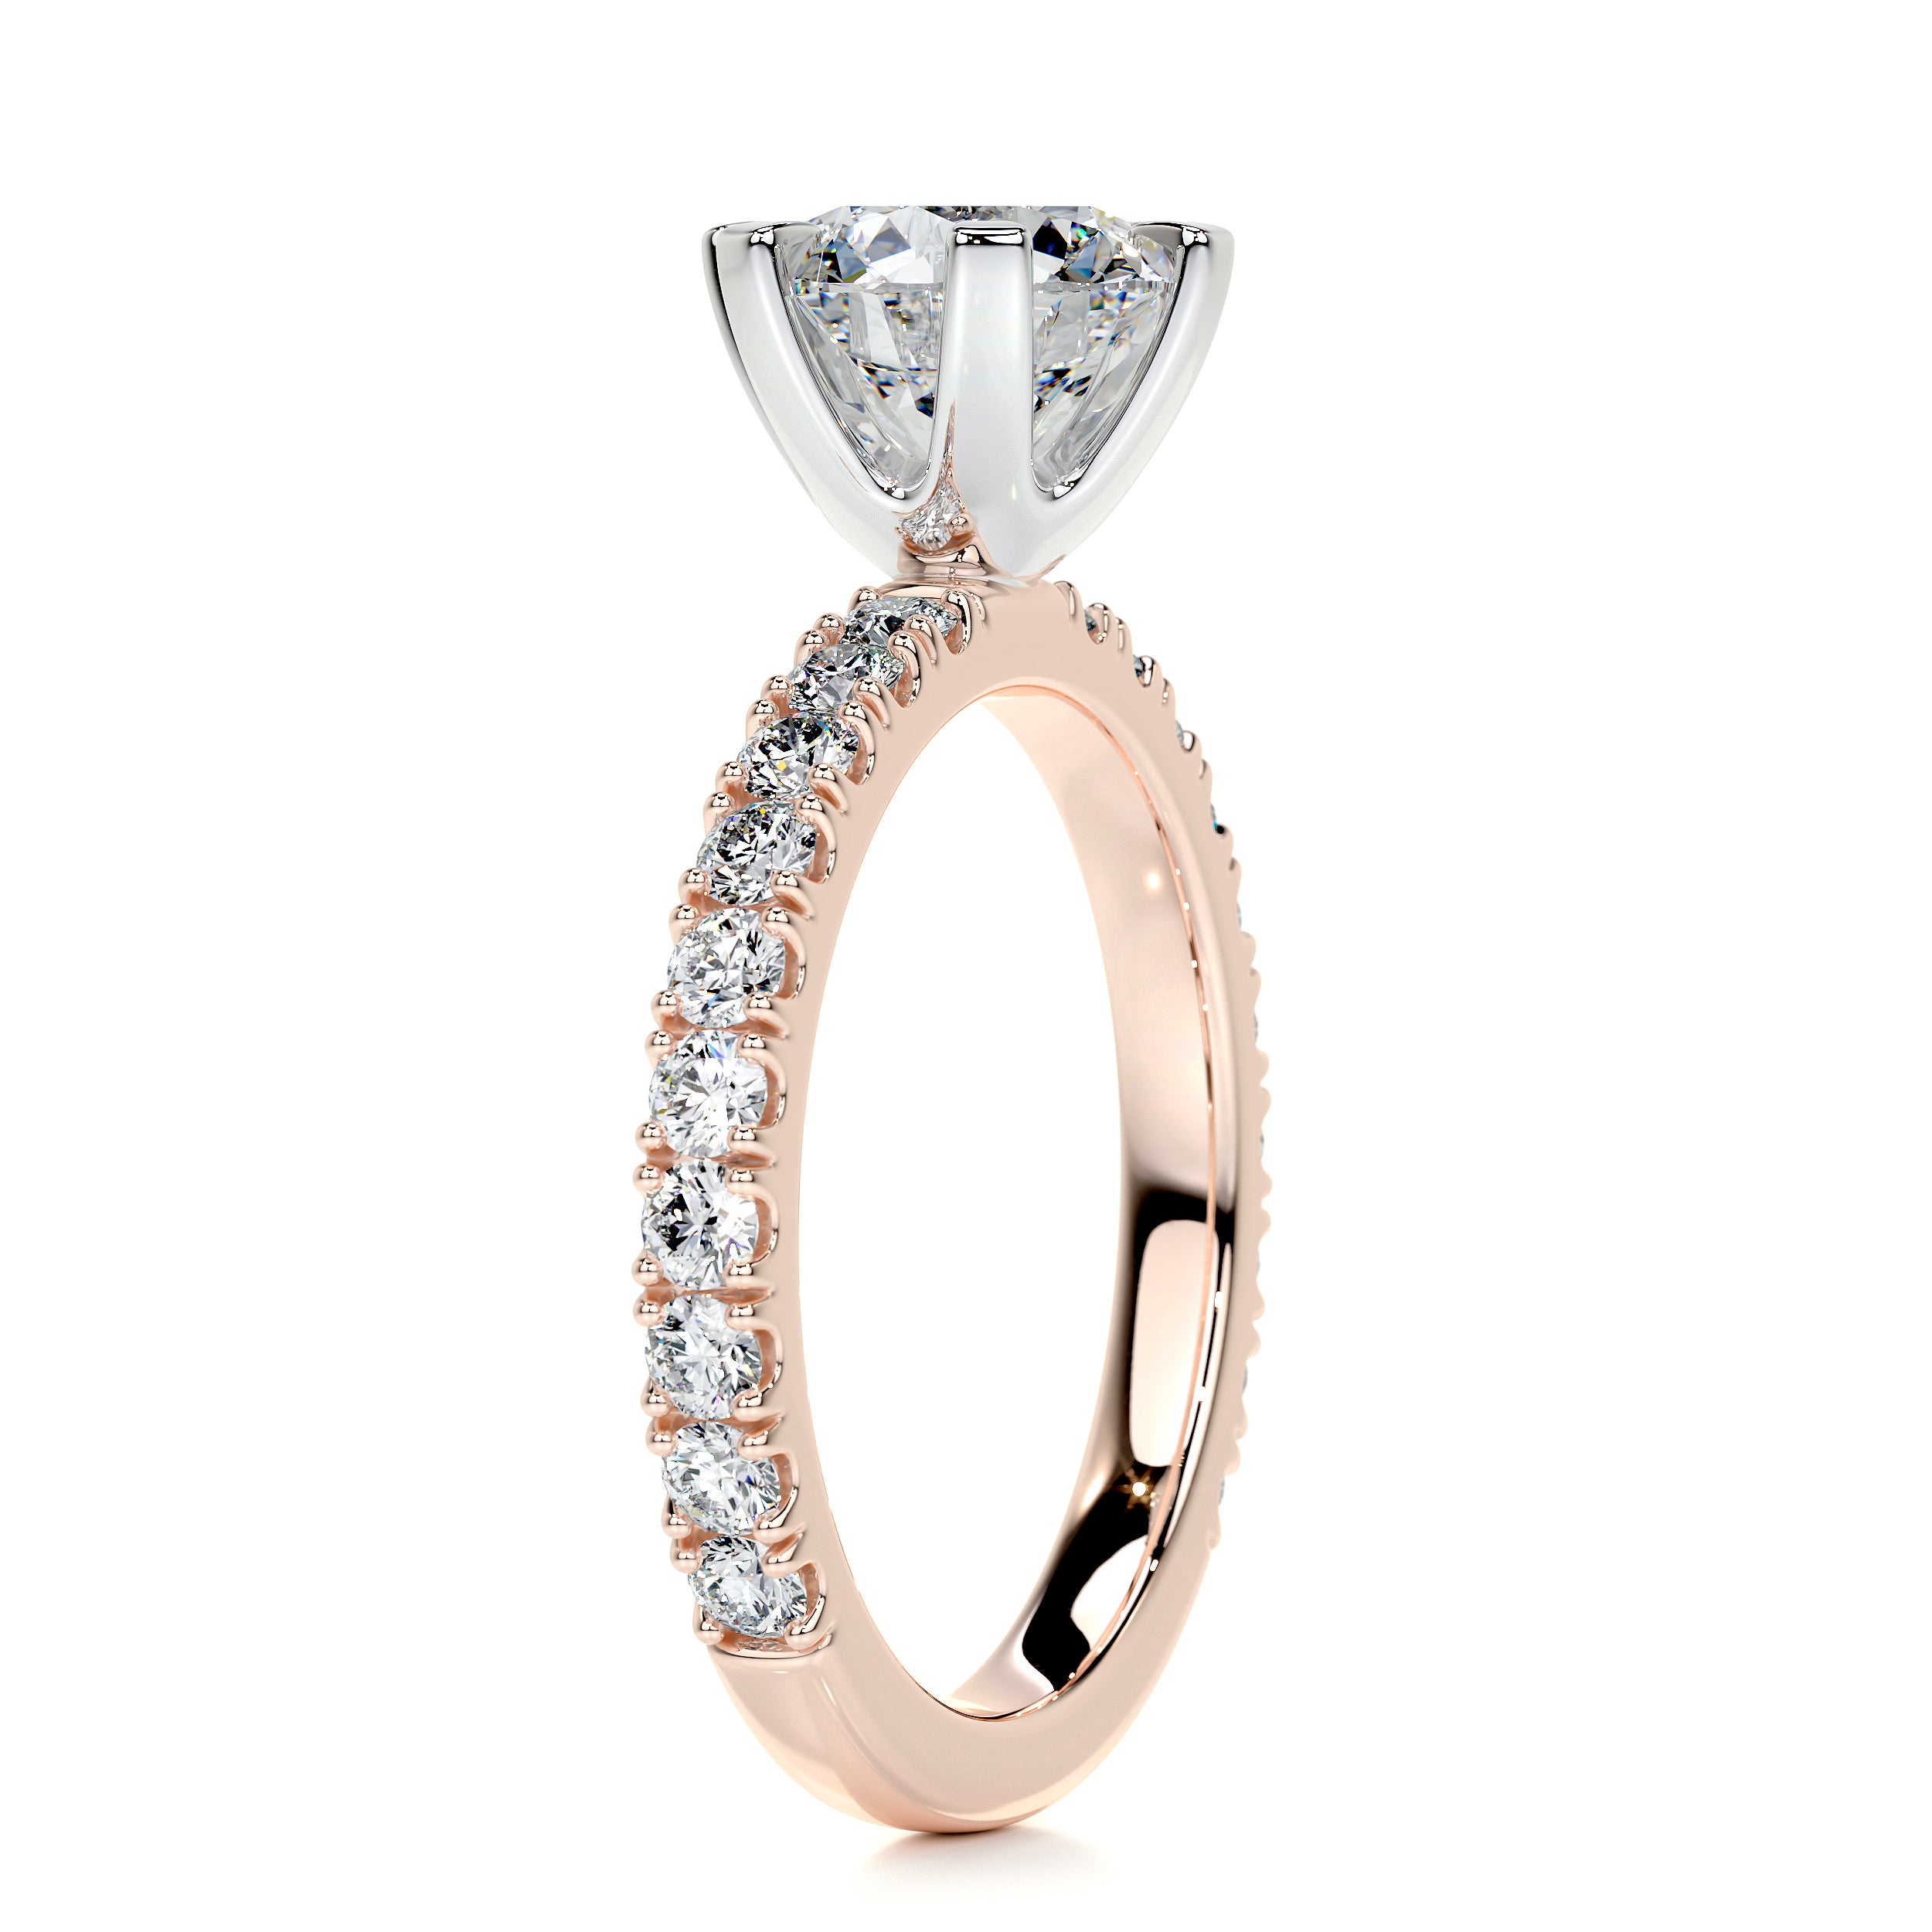 Veronica Diamond Engagement Ring   (2 Carat) -14K Rose Gold